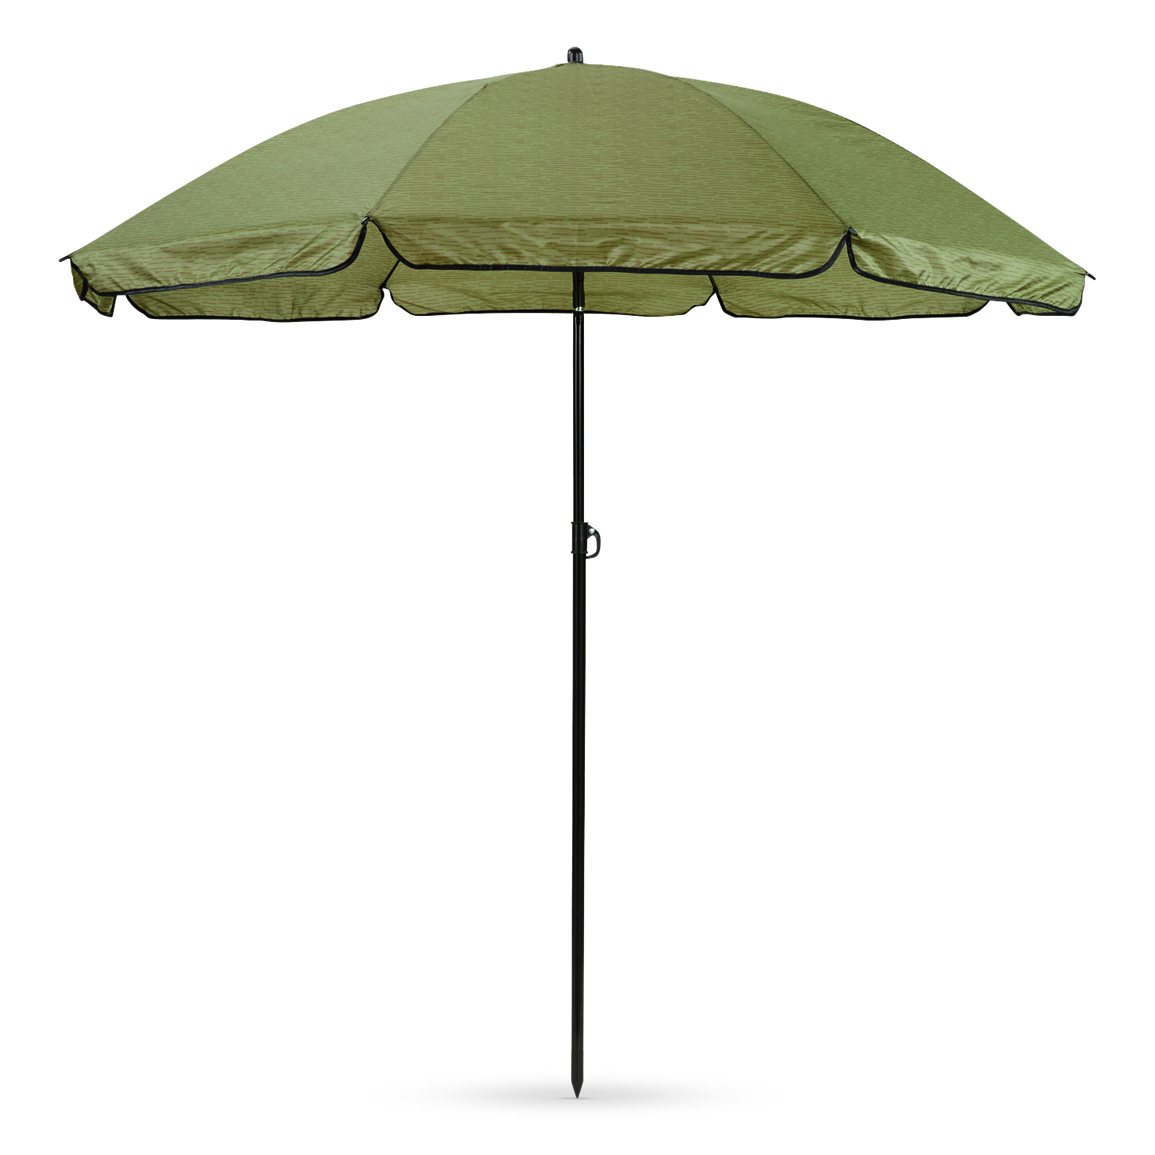 German Military Style 6' Patio Beach Umbrella